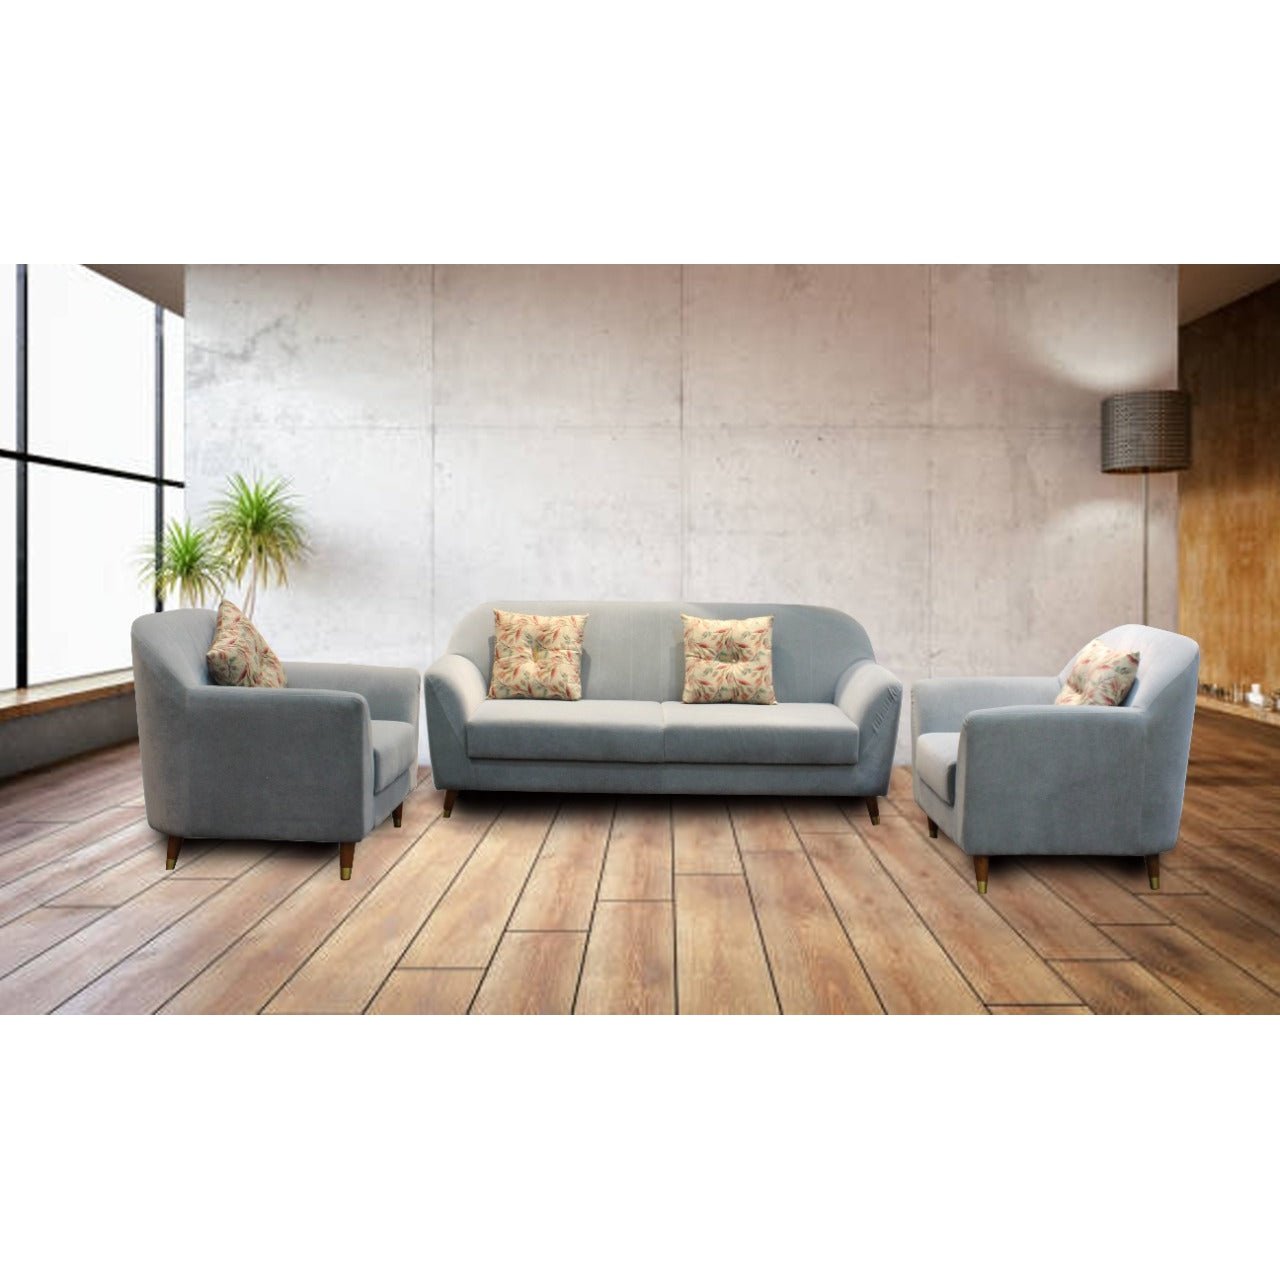 VR-182, CALAGARY 3+1+1 SOFA SET Mobel Furniture